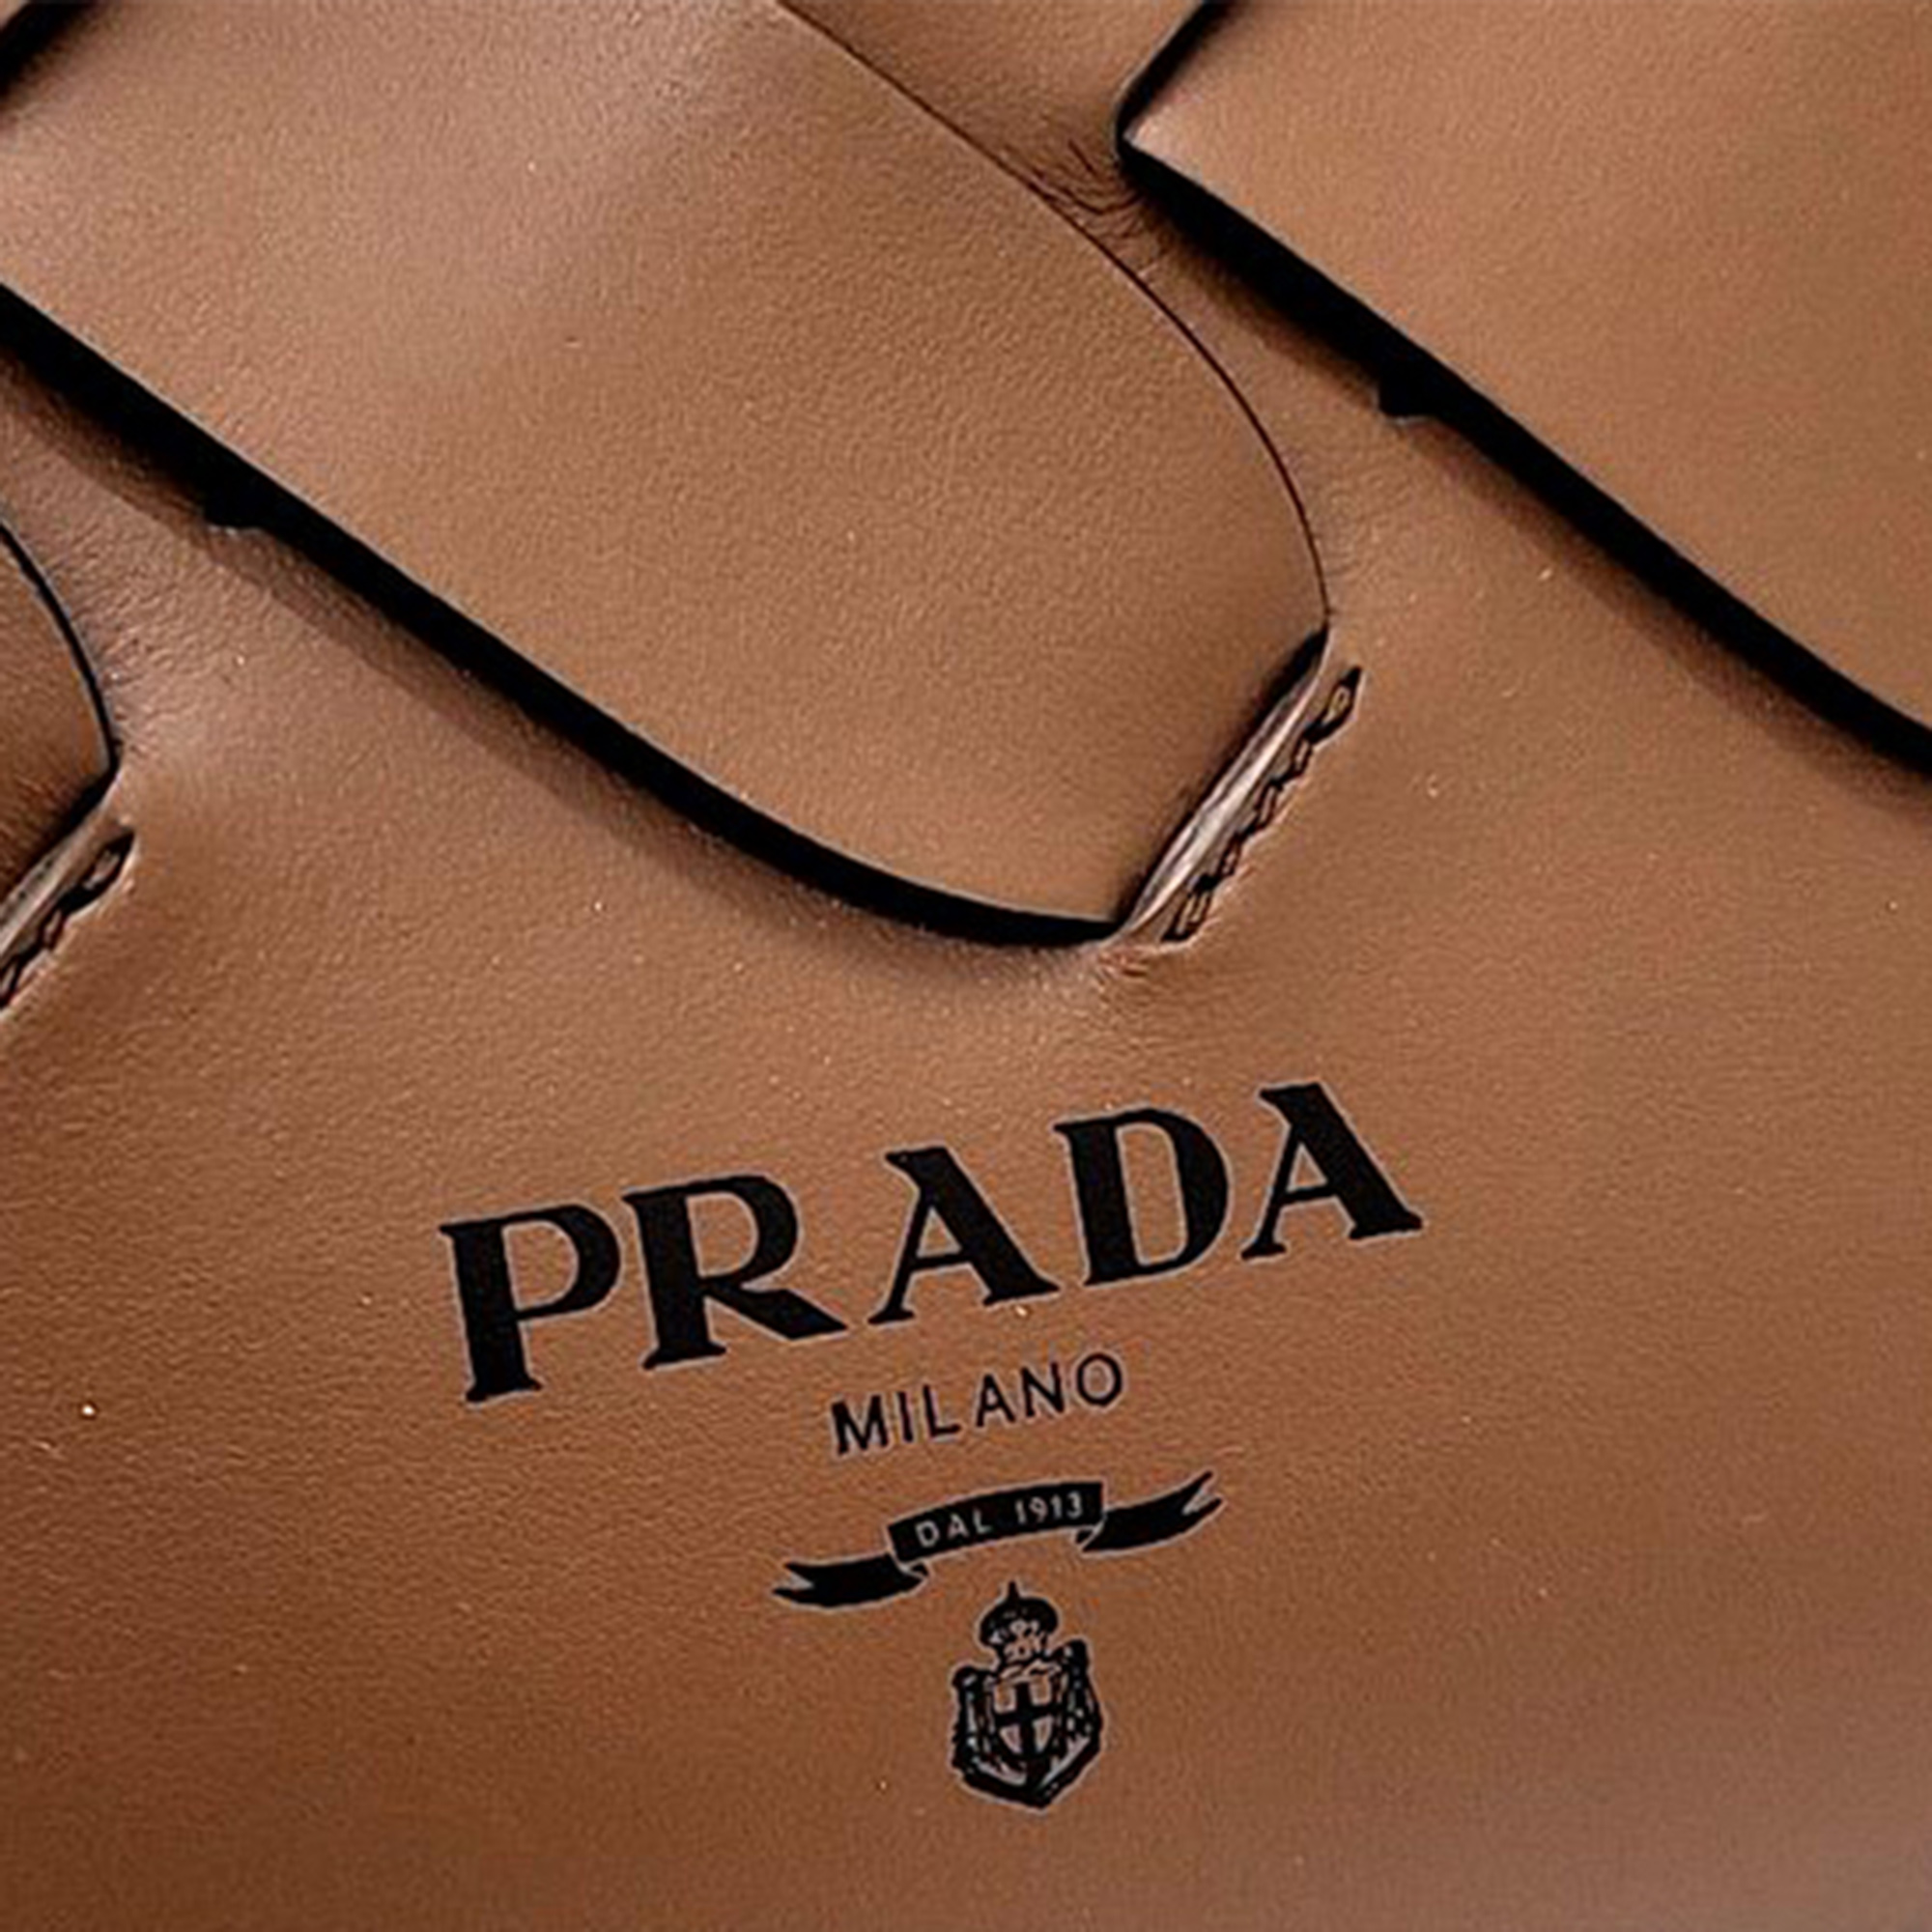 Prada Tres Leather Woven Cross Bag (1BH158)